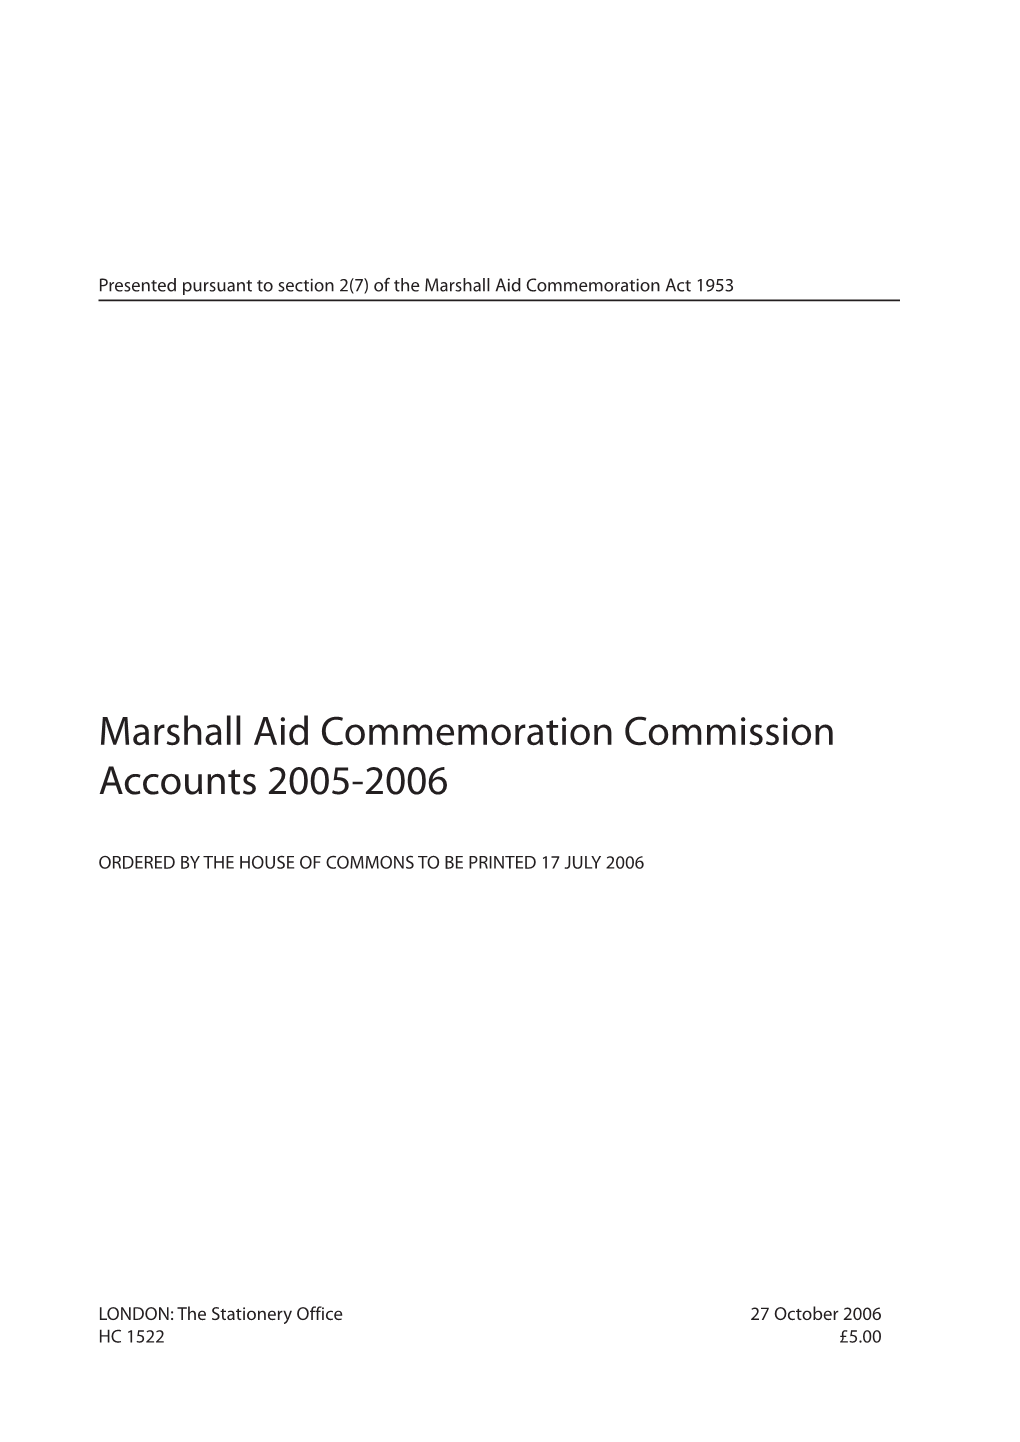 Marshall Aid Commemoration Commission Accounts 2005-2006